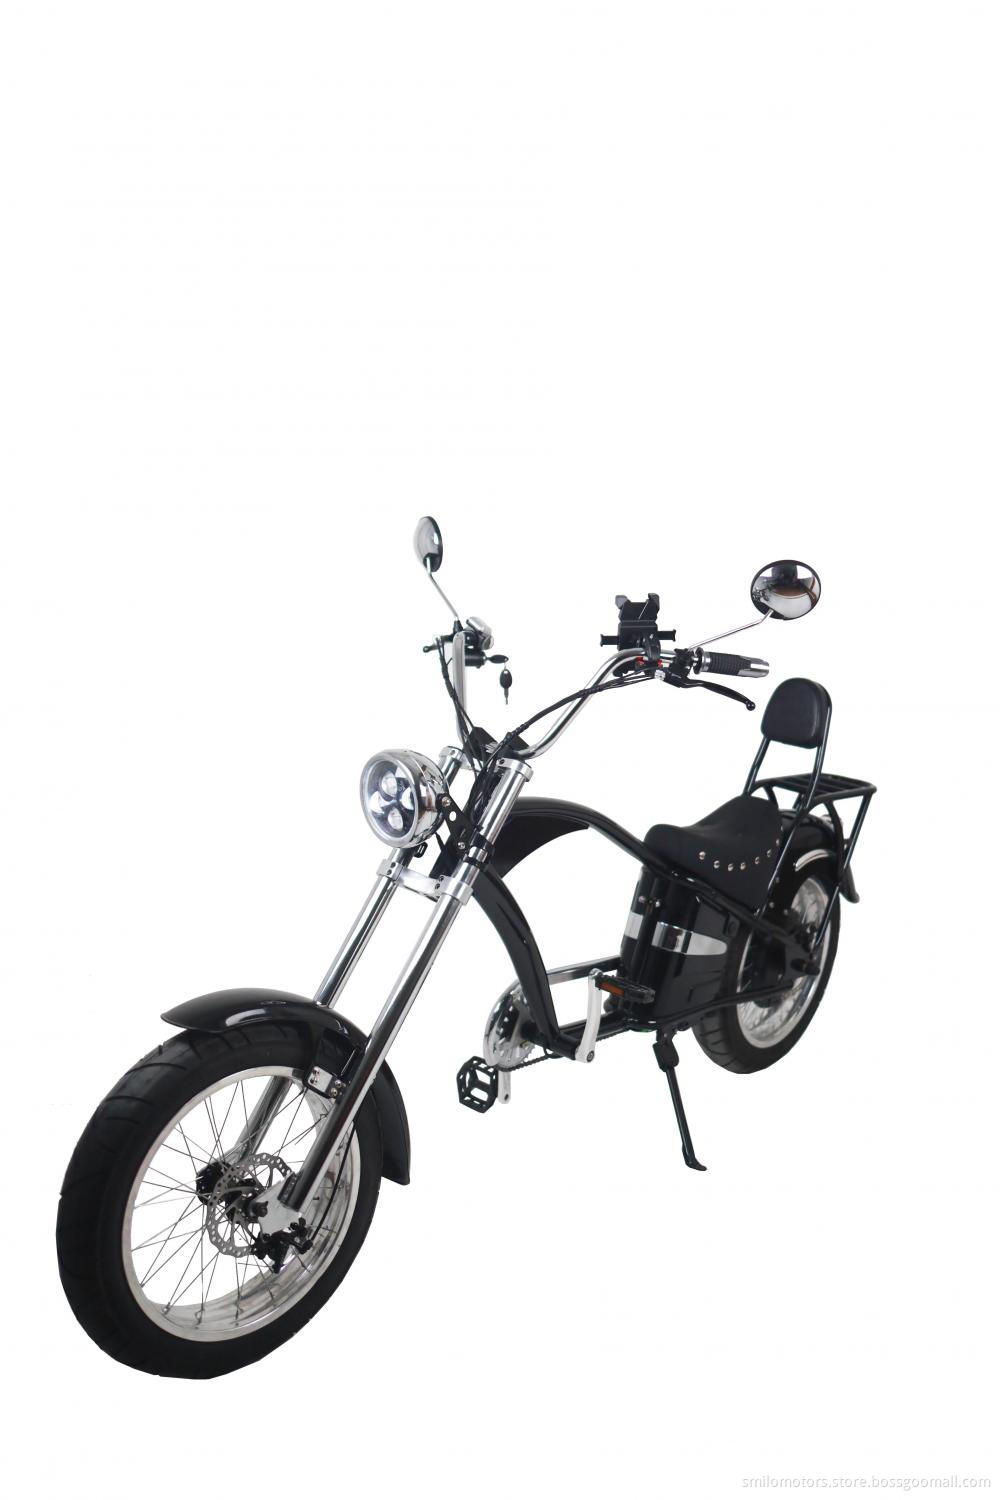 Best quality 1000w 20ah electric chopper bike